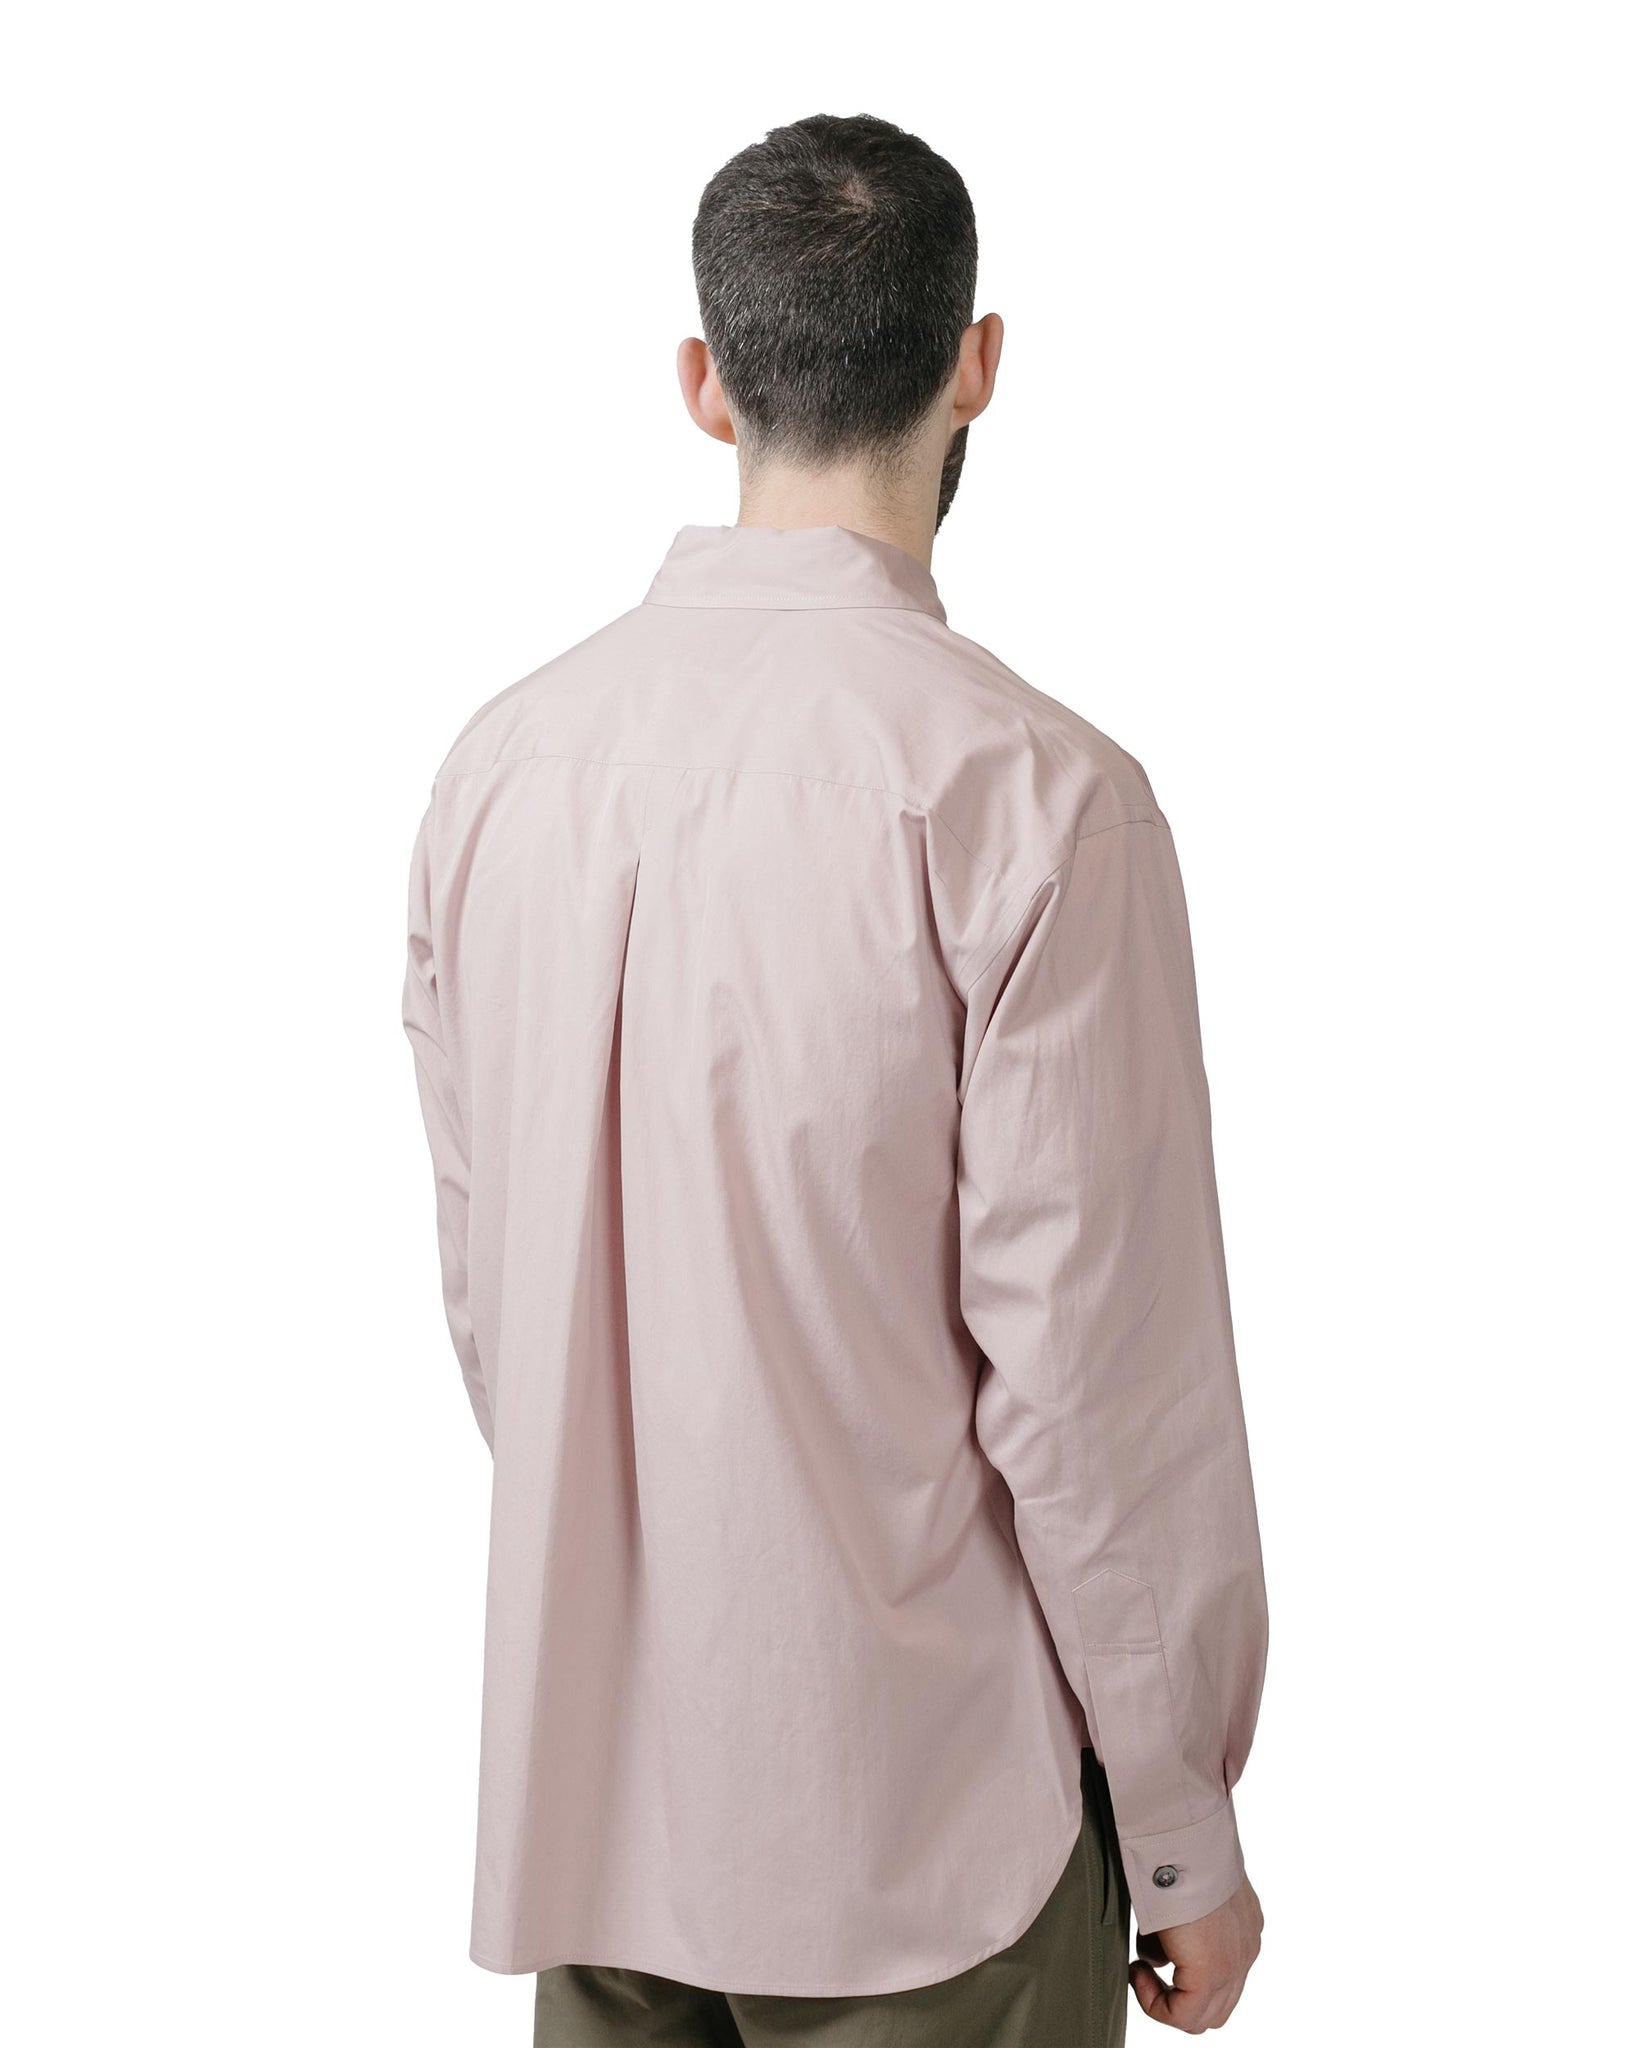 Margaret Howell Half Placket Shirt Paper Cotton Poplin Dusty Pink model back